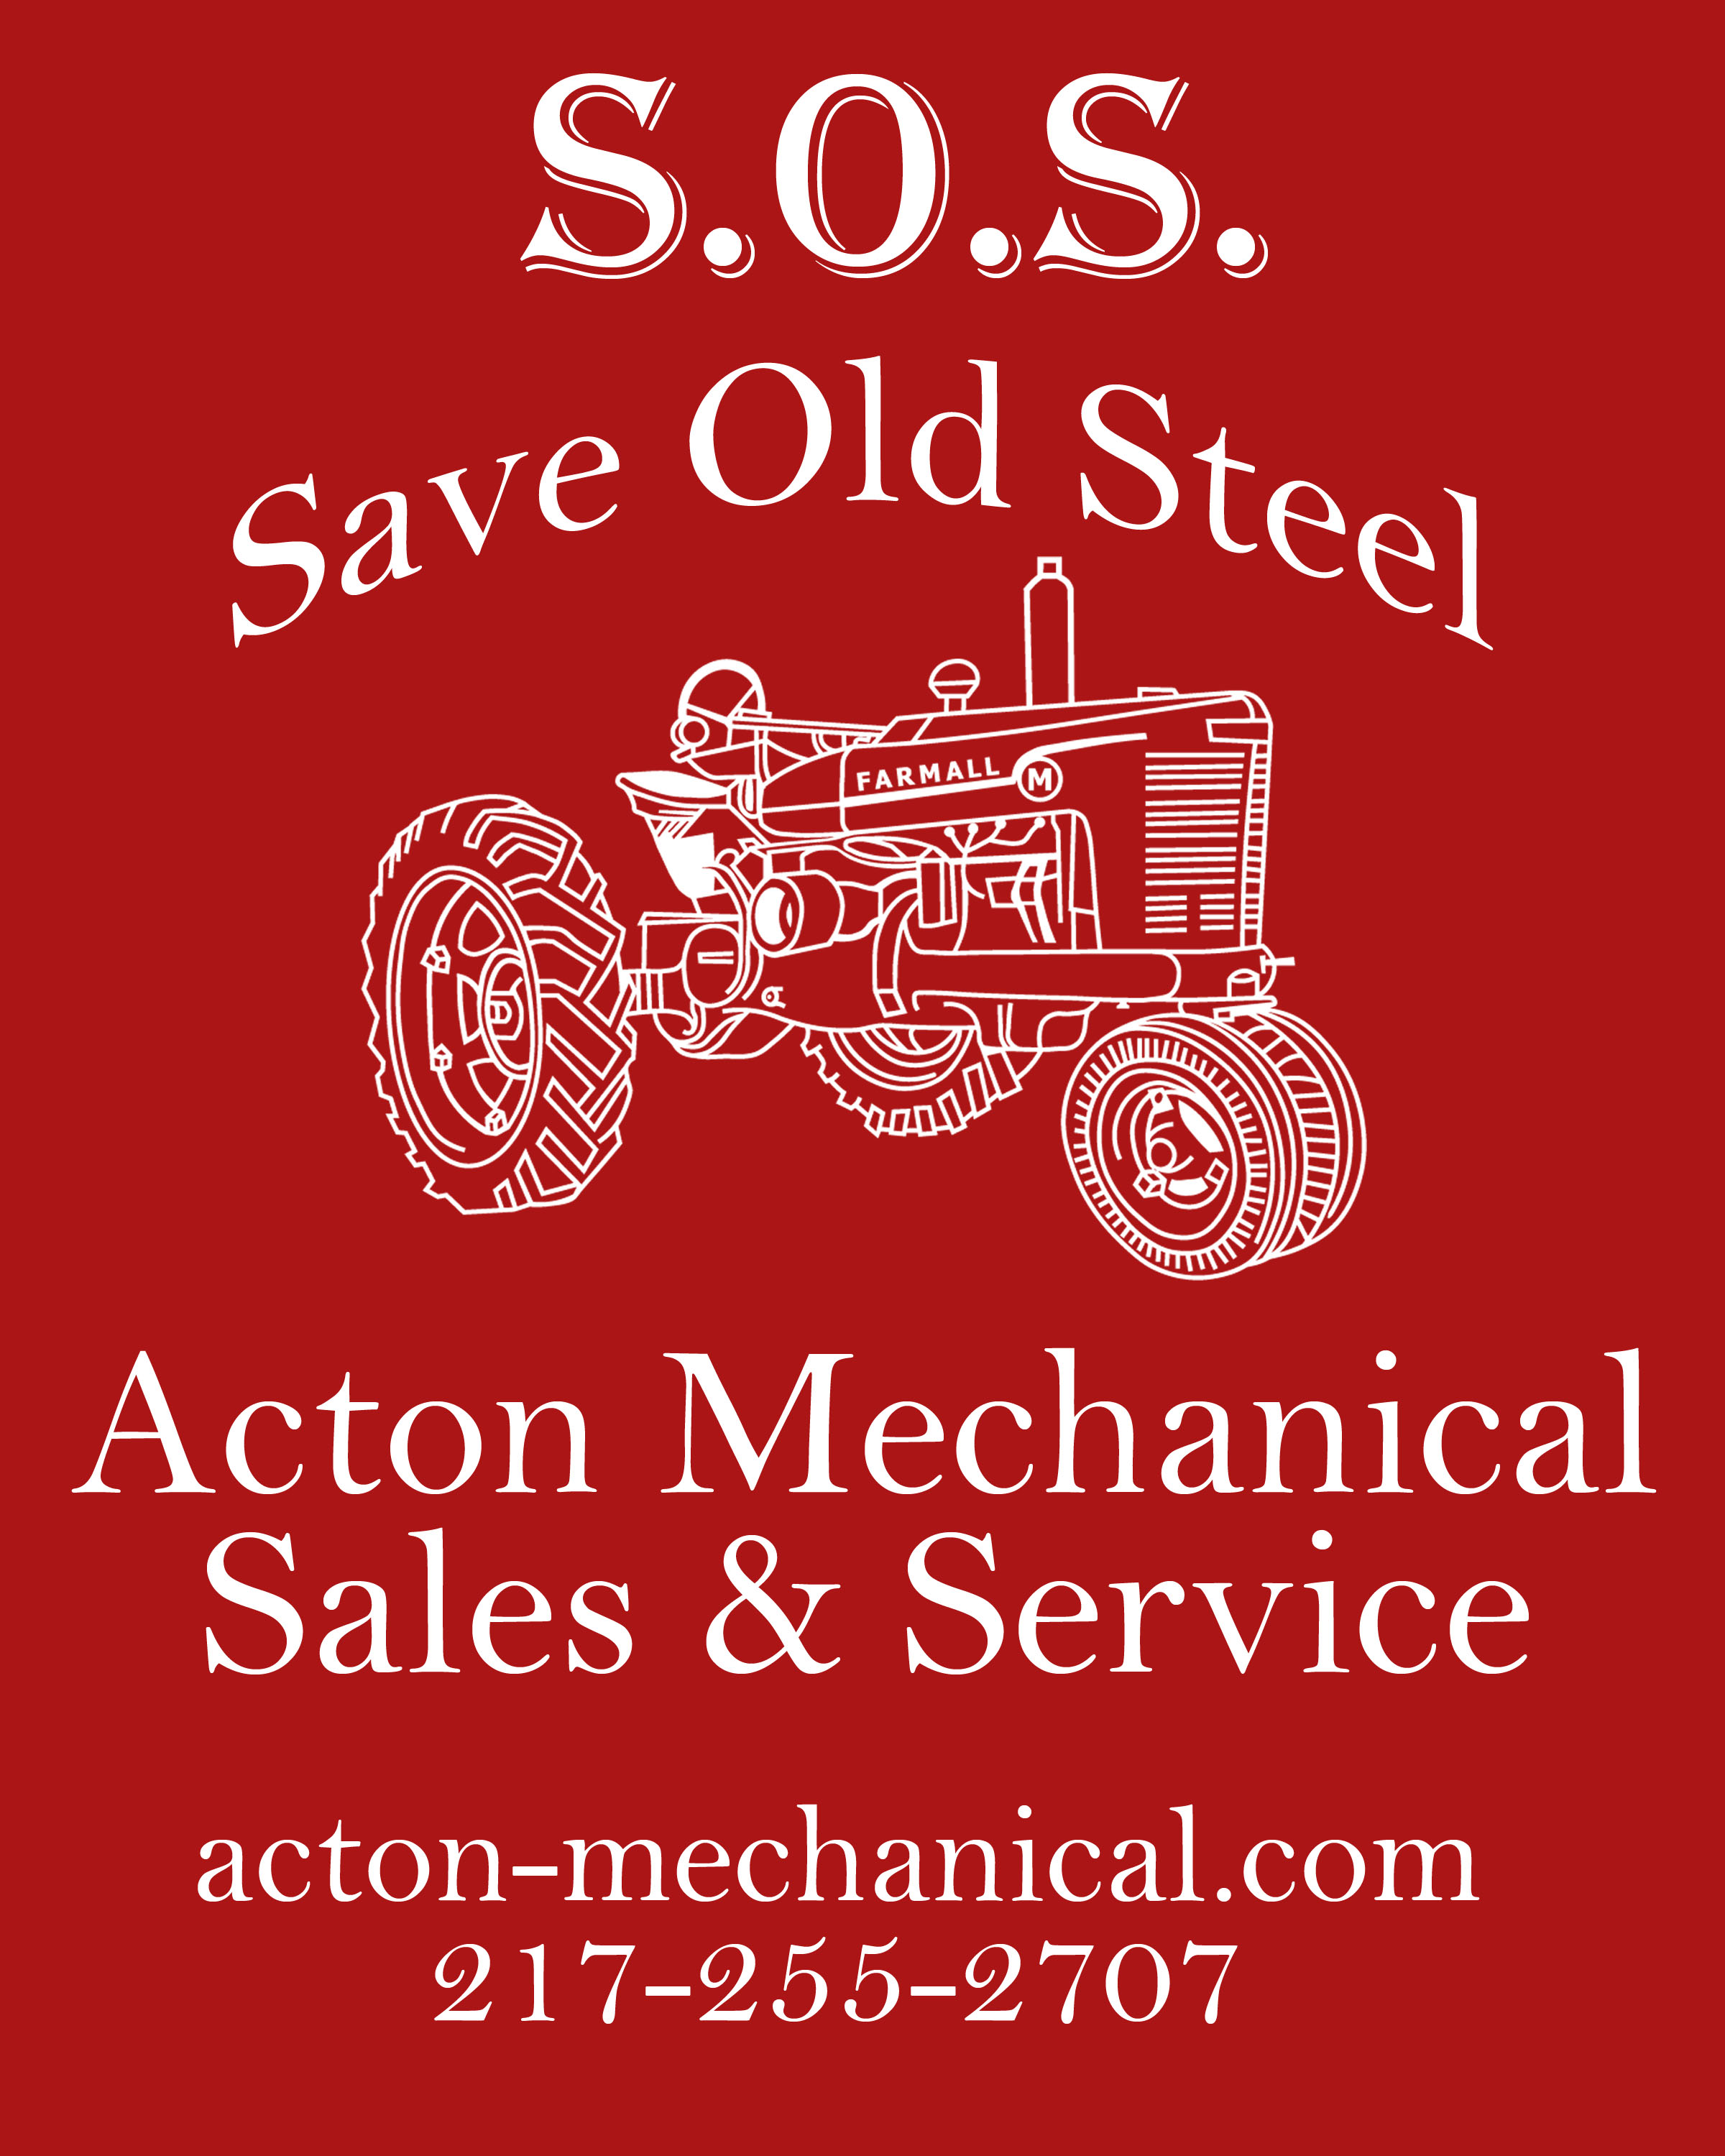 Acton Mechanical Collison Illinois Save Old Steel